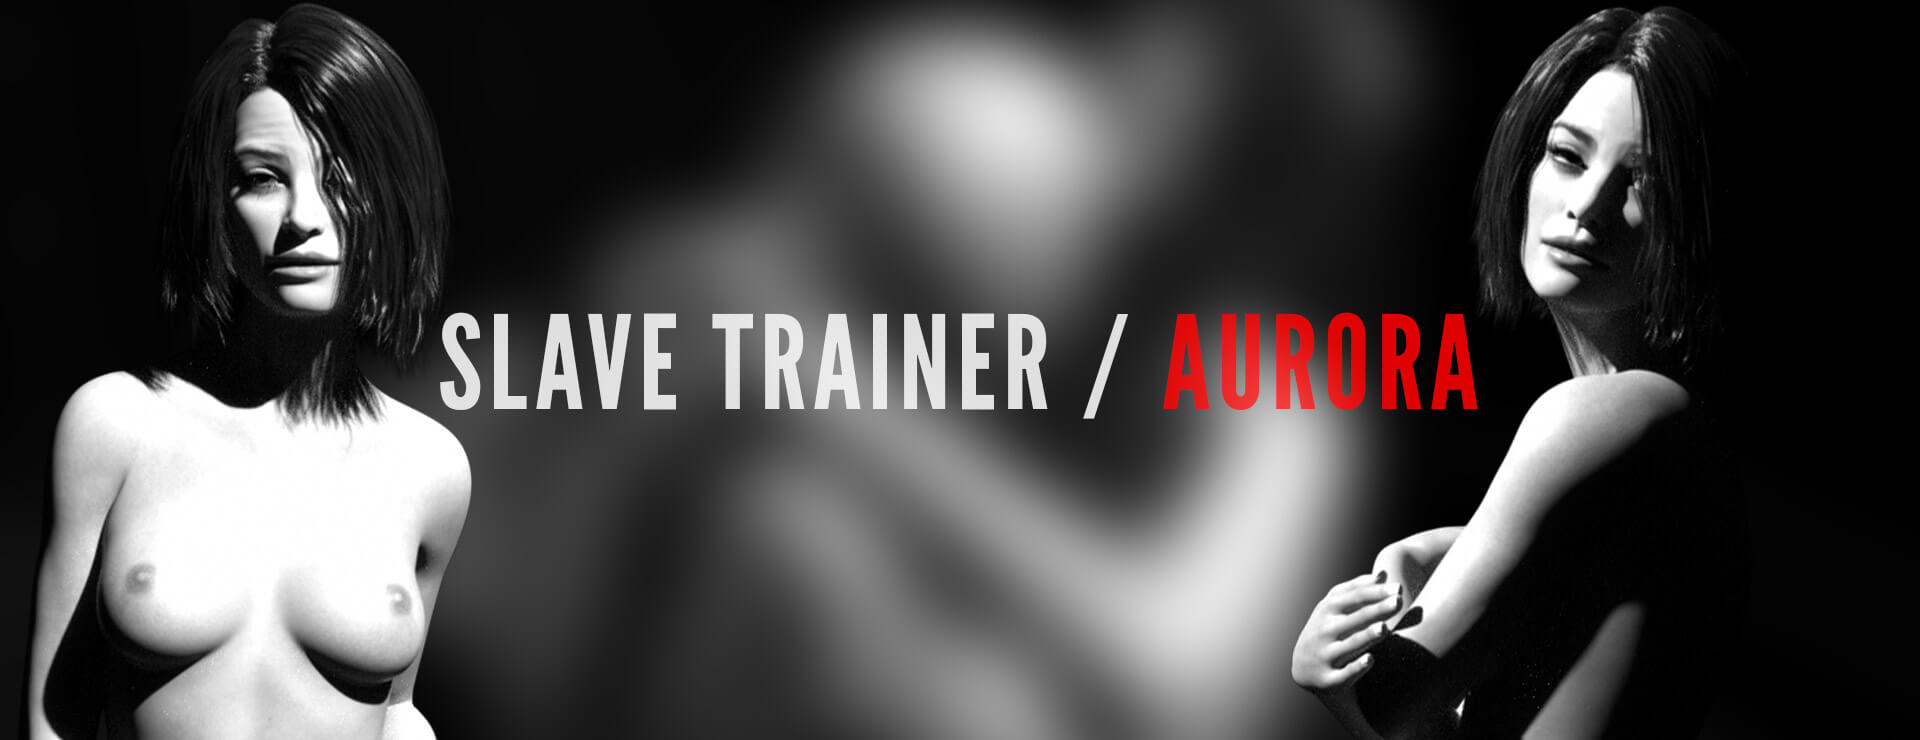 Slave Trainer Aurora - シミュレーション ゲーム